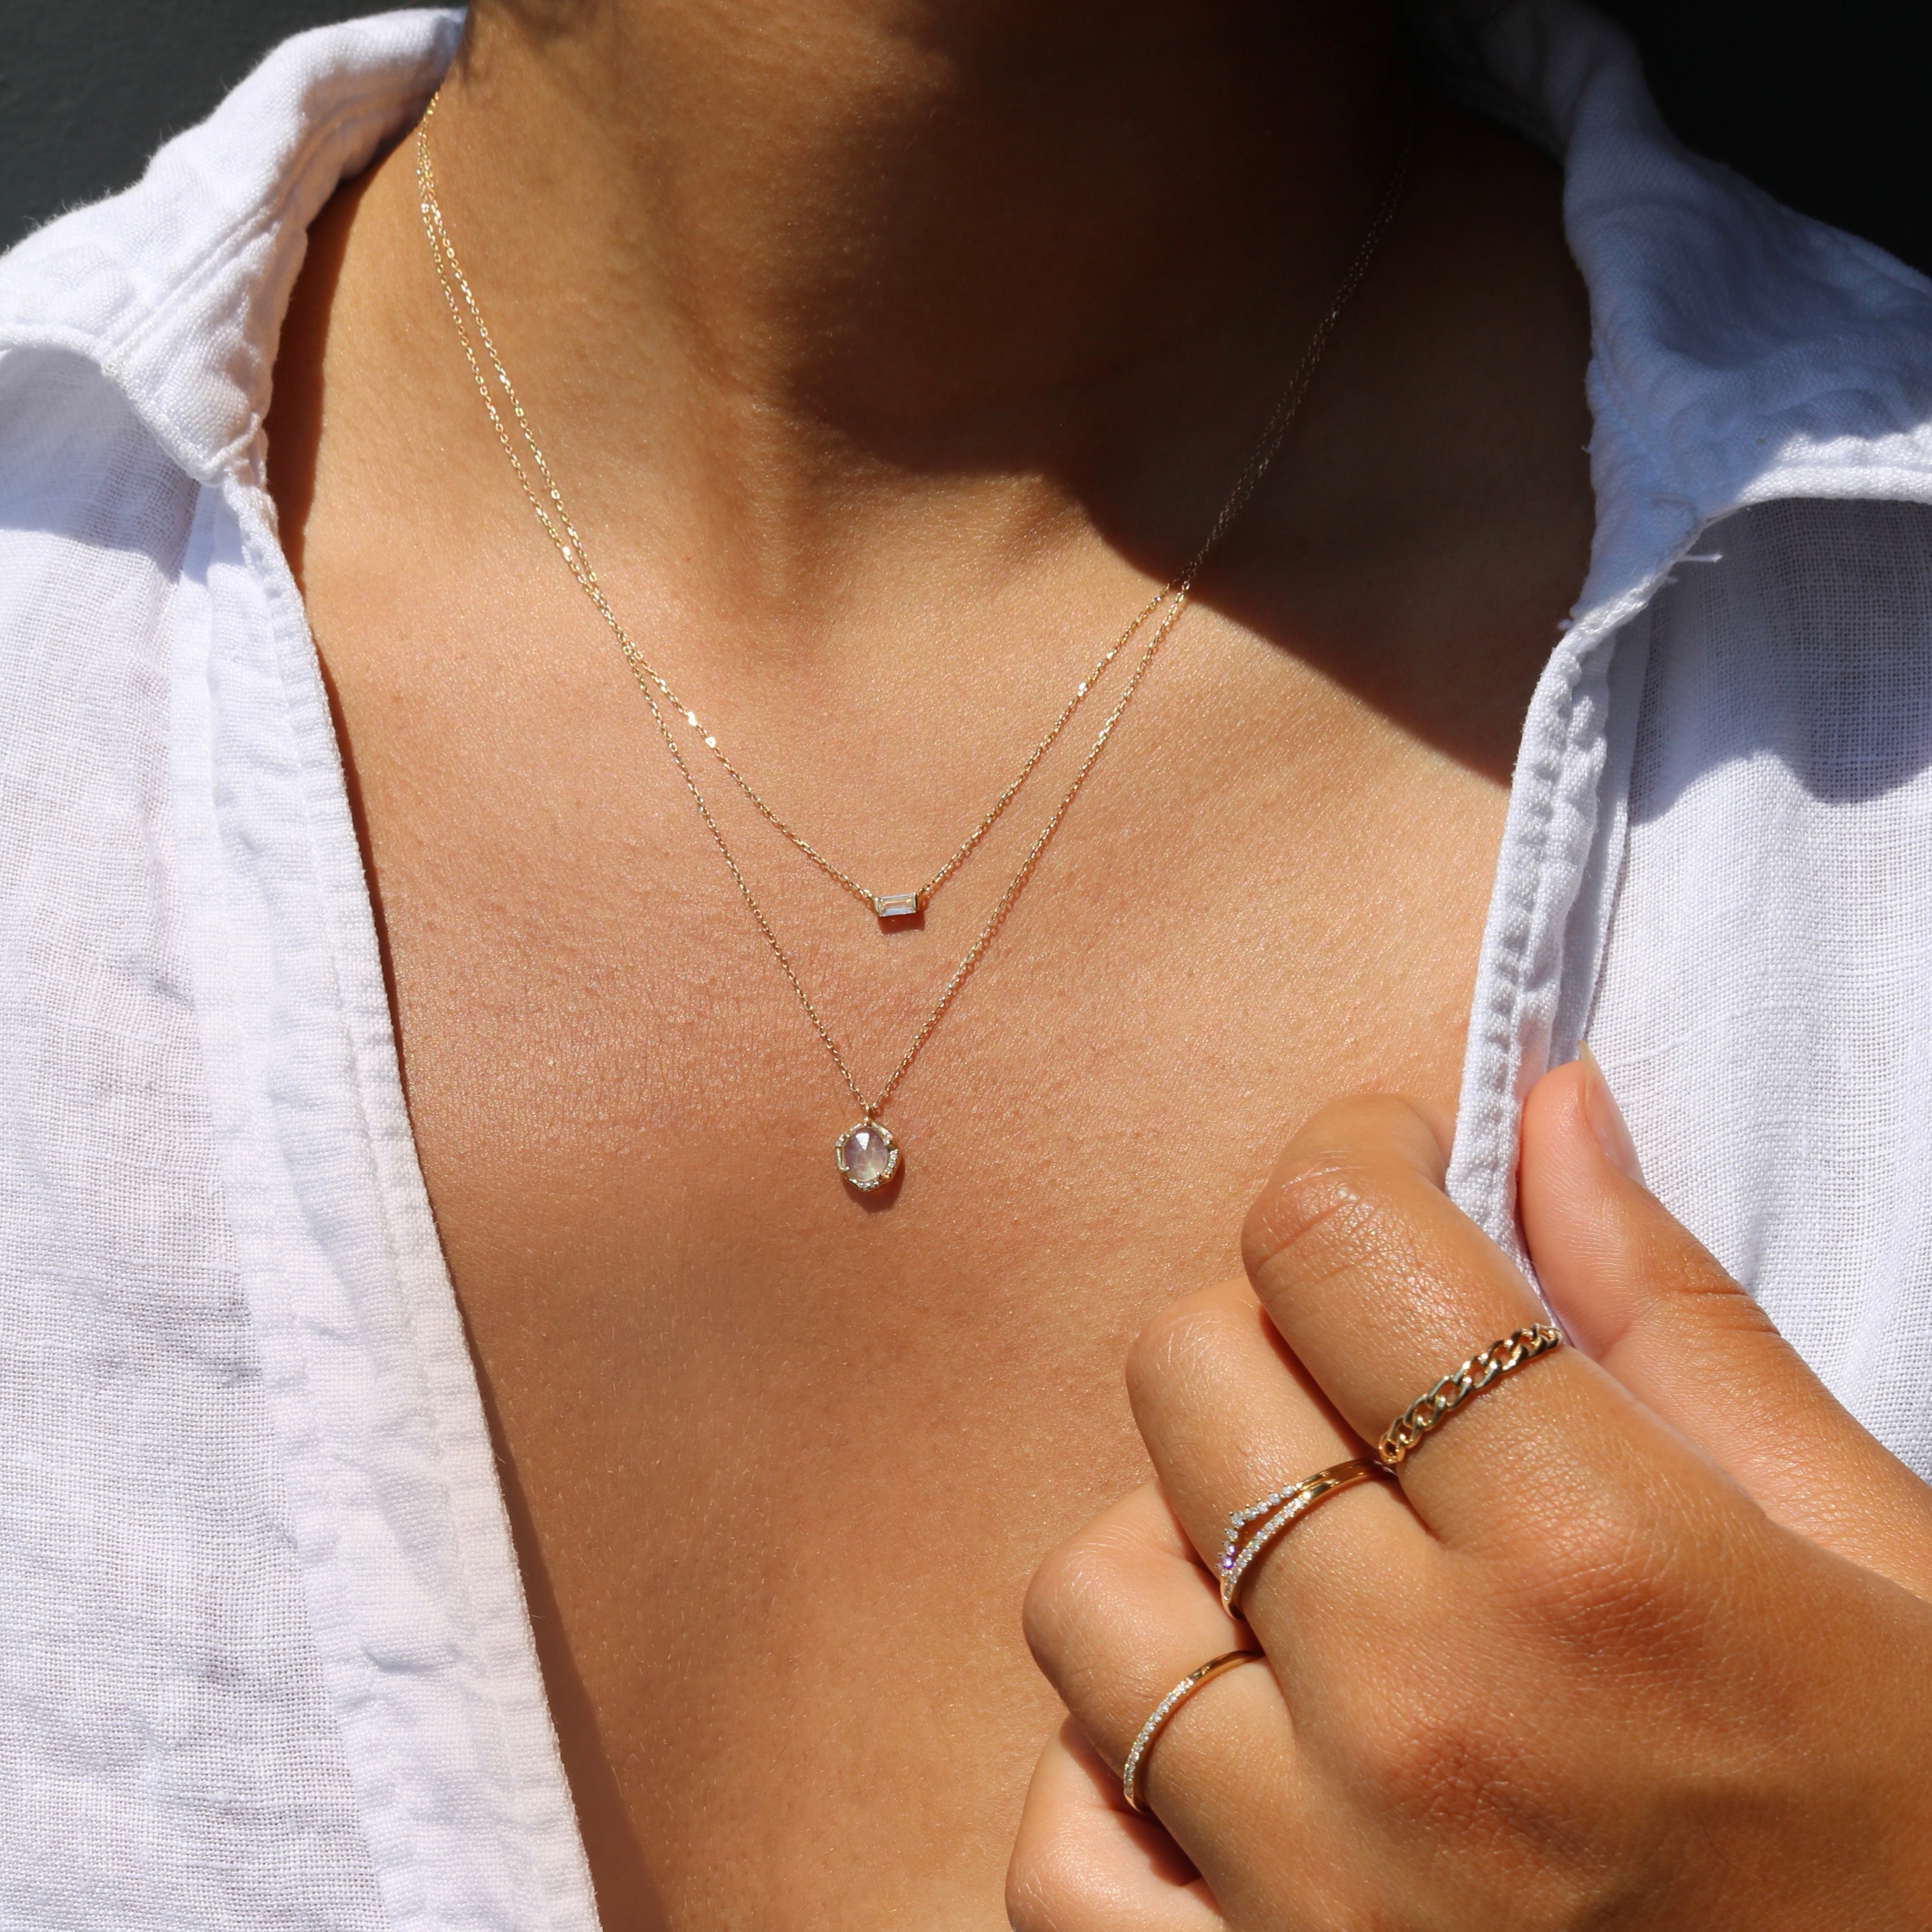 Personalised Men's Silver Interlocking Ring Necklace | Posh Totty Designs